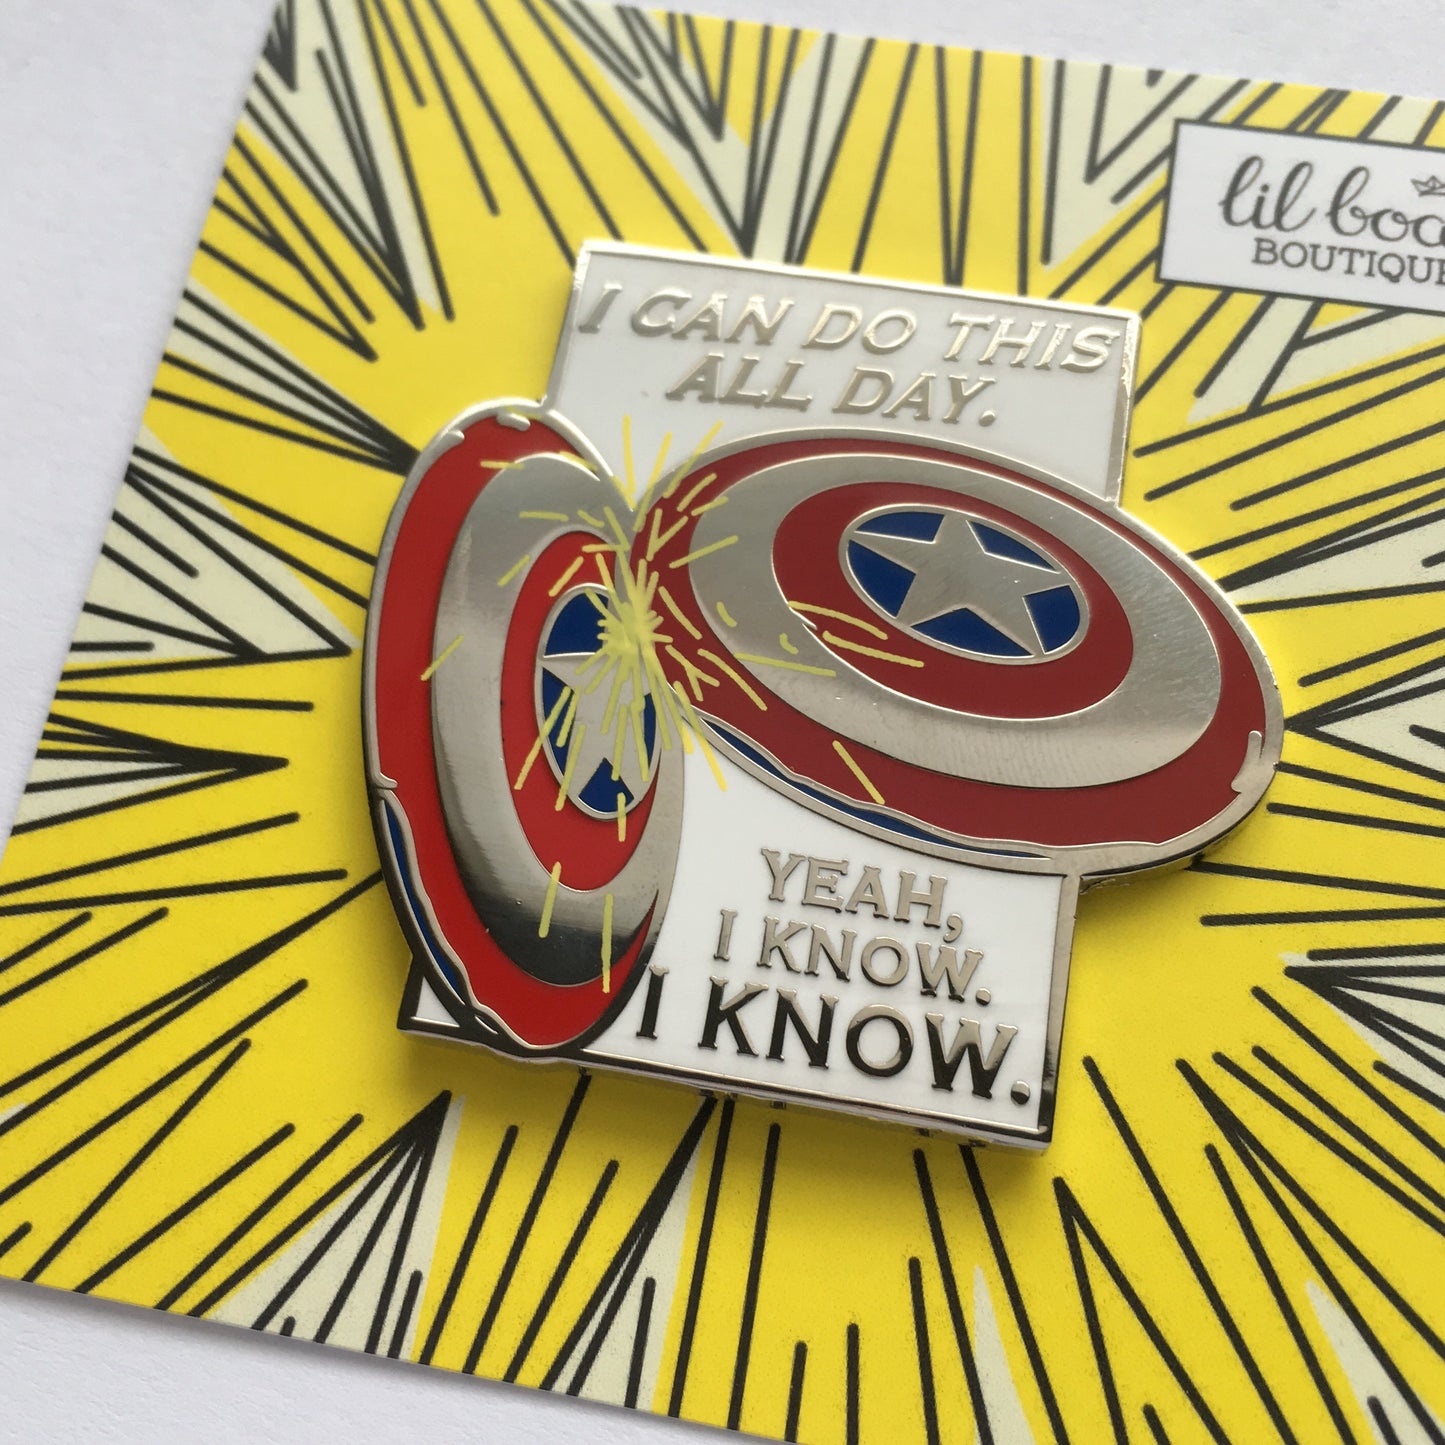 I Can Do This All Day - Enamel Pin - Avengers Endgame Captain America